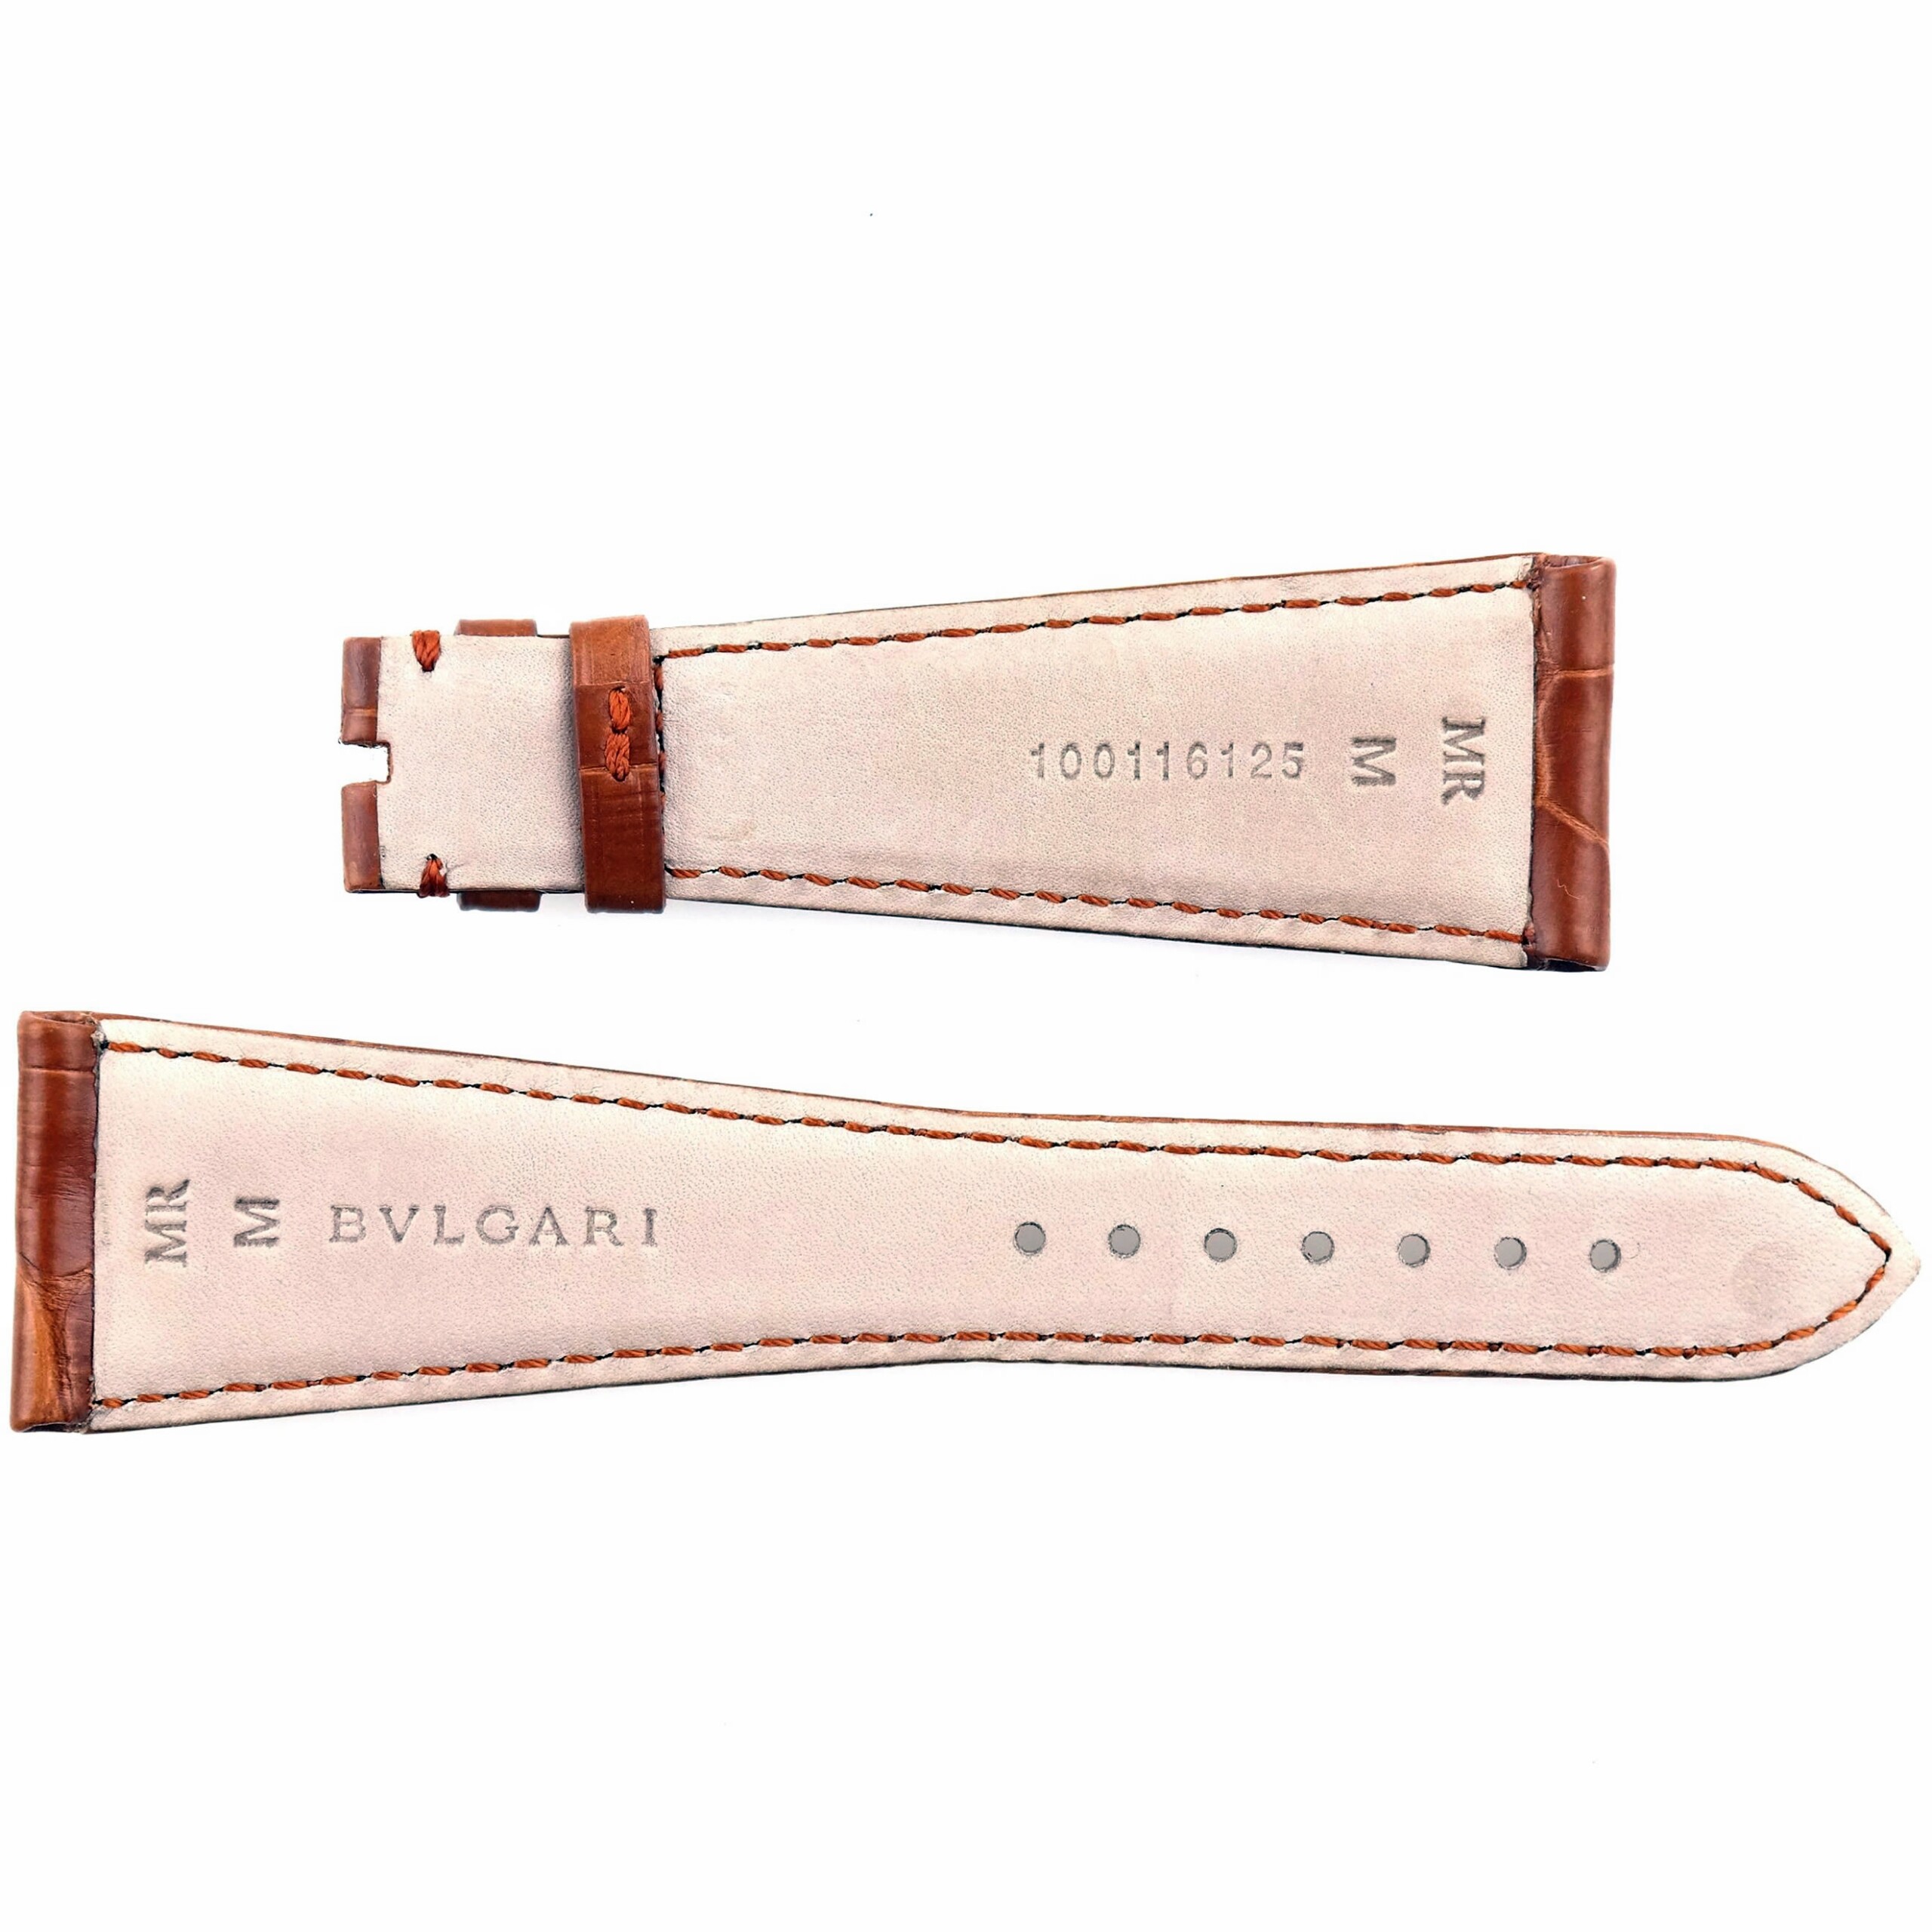 BVLGARI - Luxury Watch Strap - 26 mm - Genuine Leather - Brown